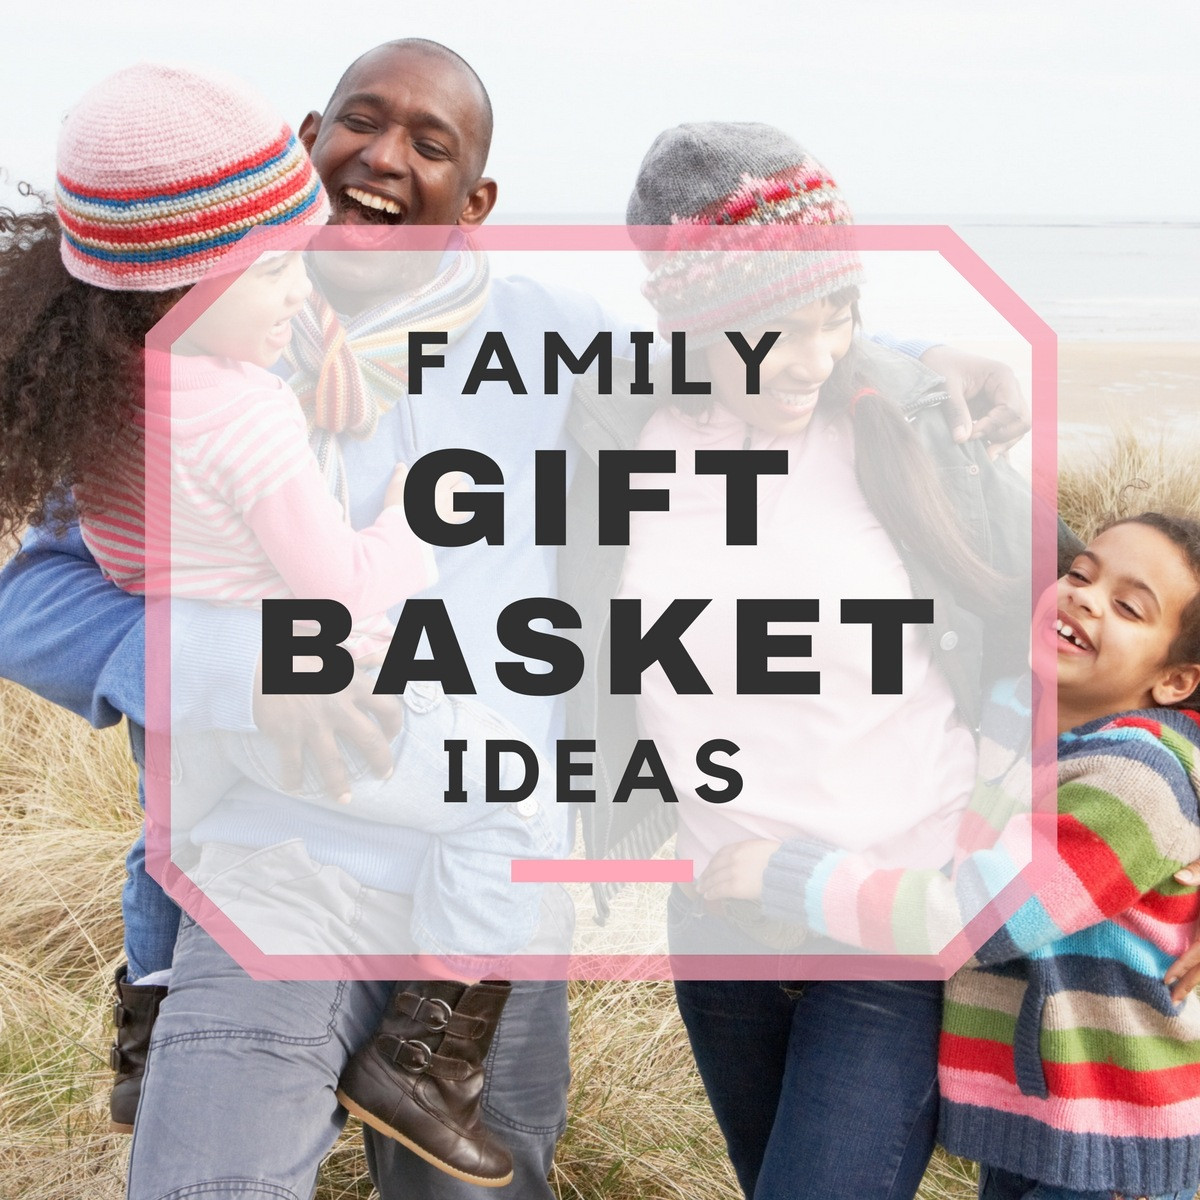 Gift Basket Ideas For Families
 10 Best Family Gift Basket Ideas